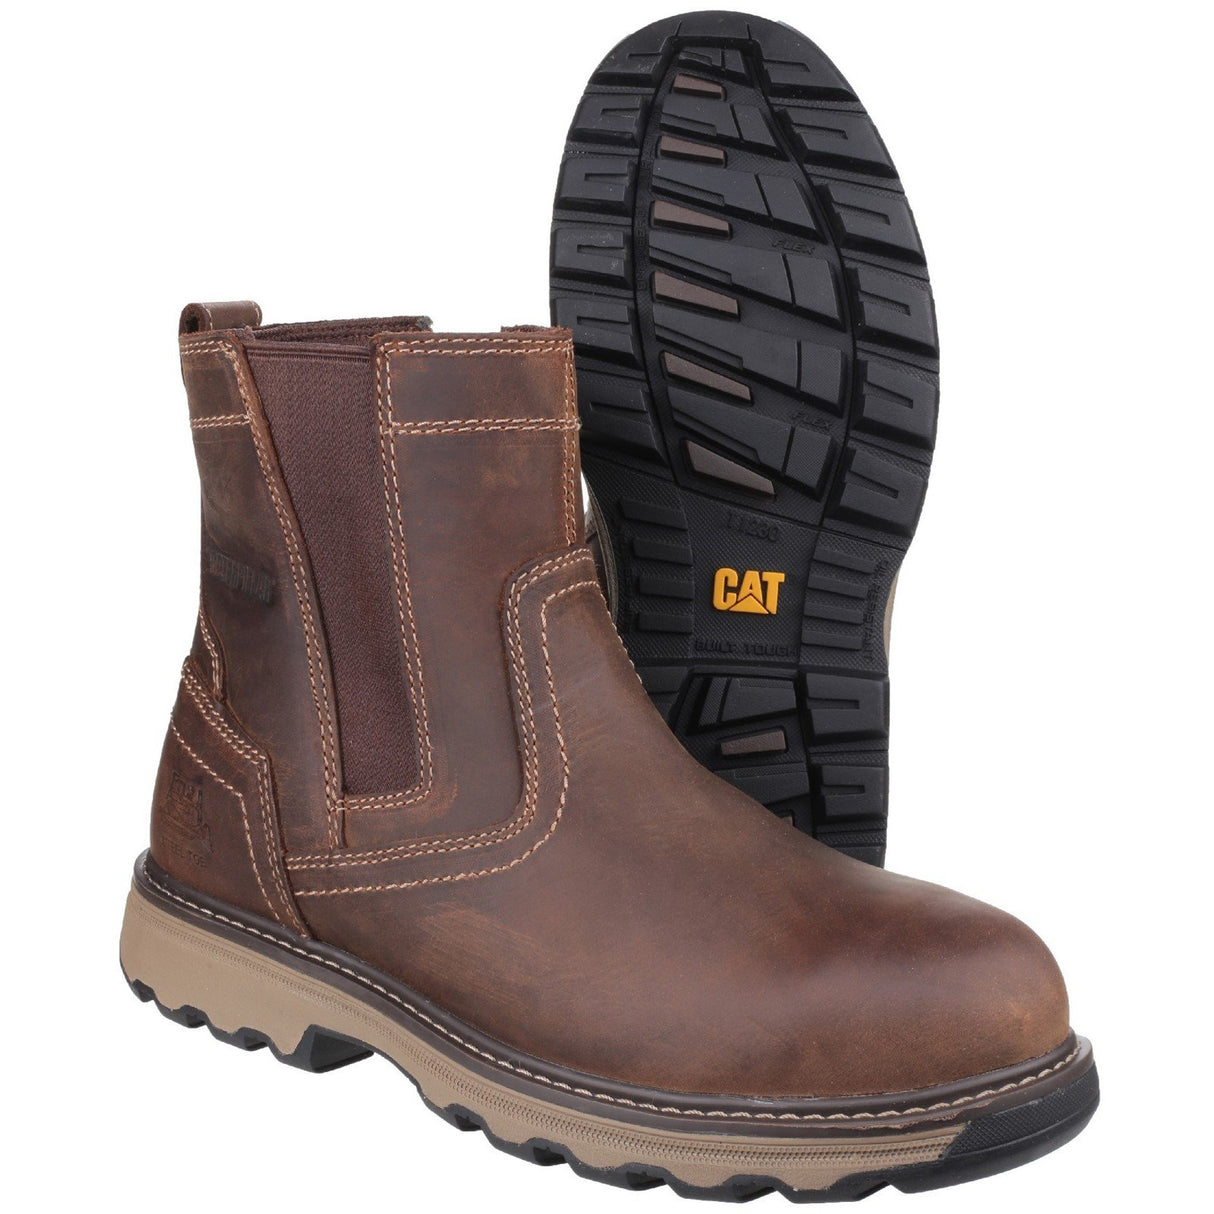 Caterpillar Pelton Safety Boots